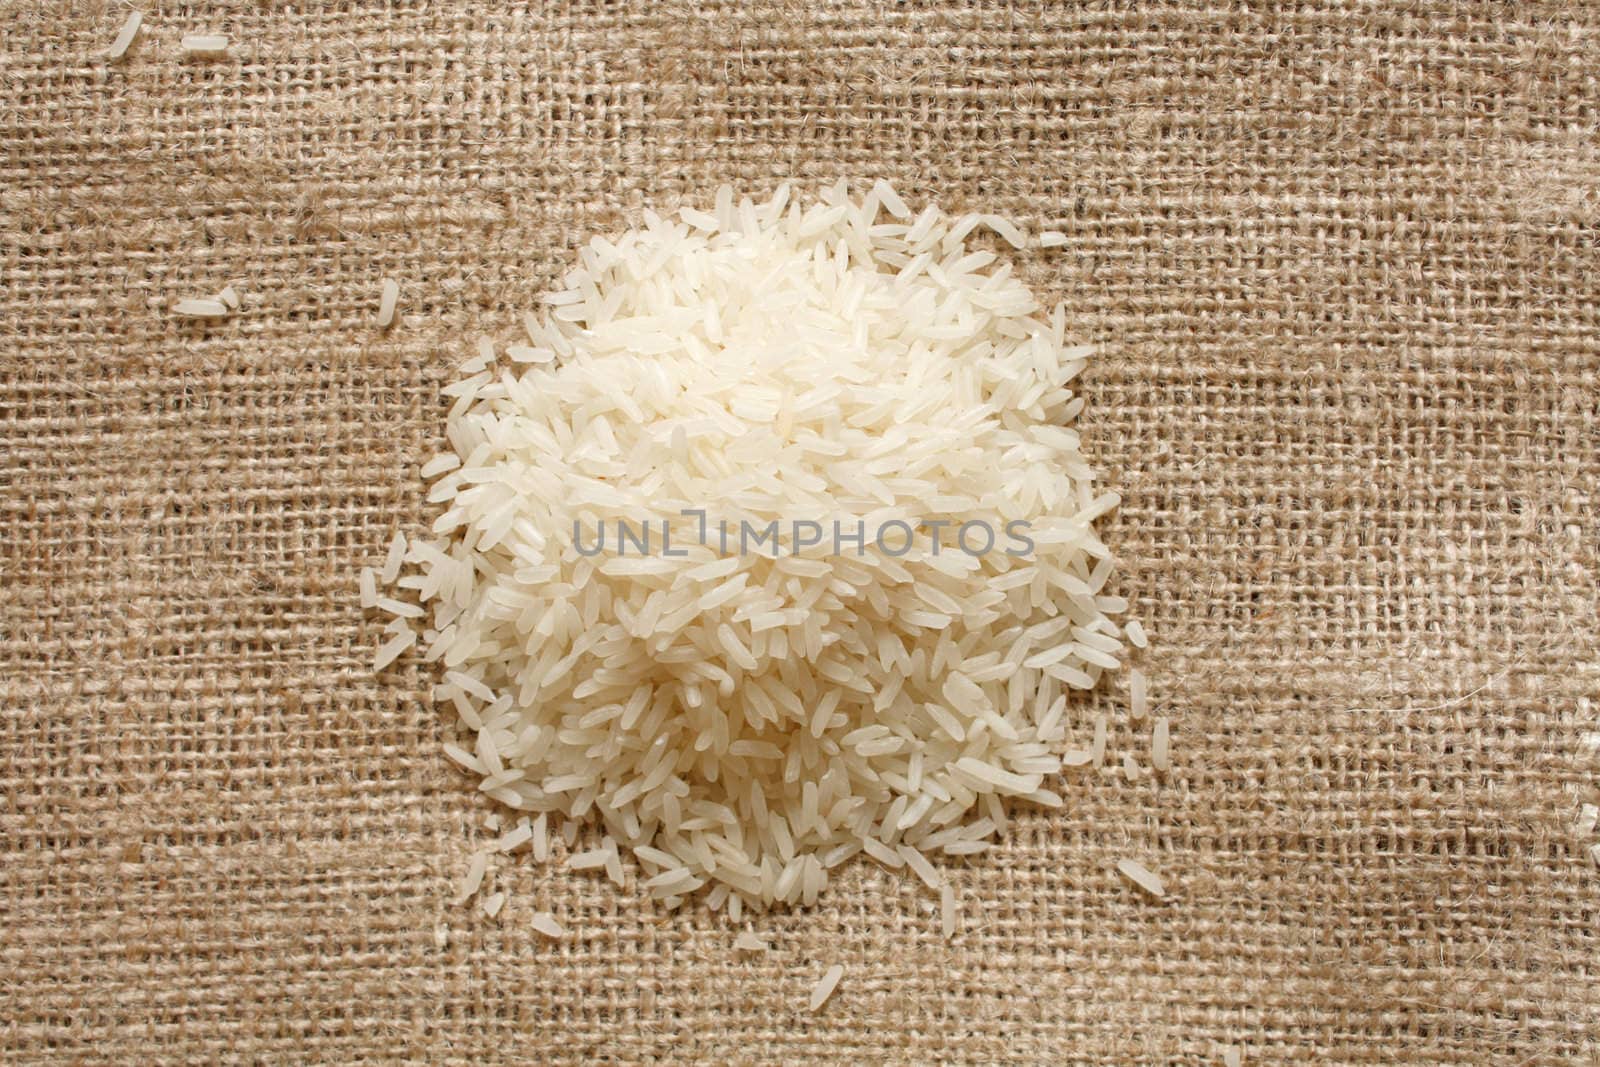 Jasmine rice on a extile surface